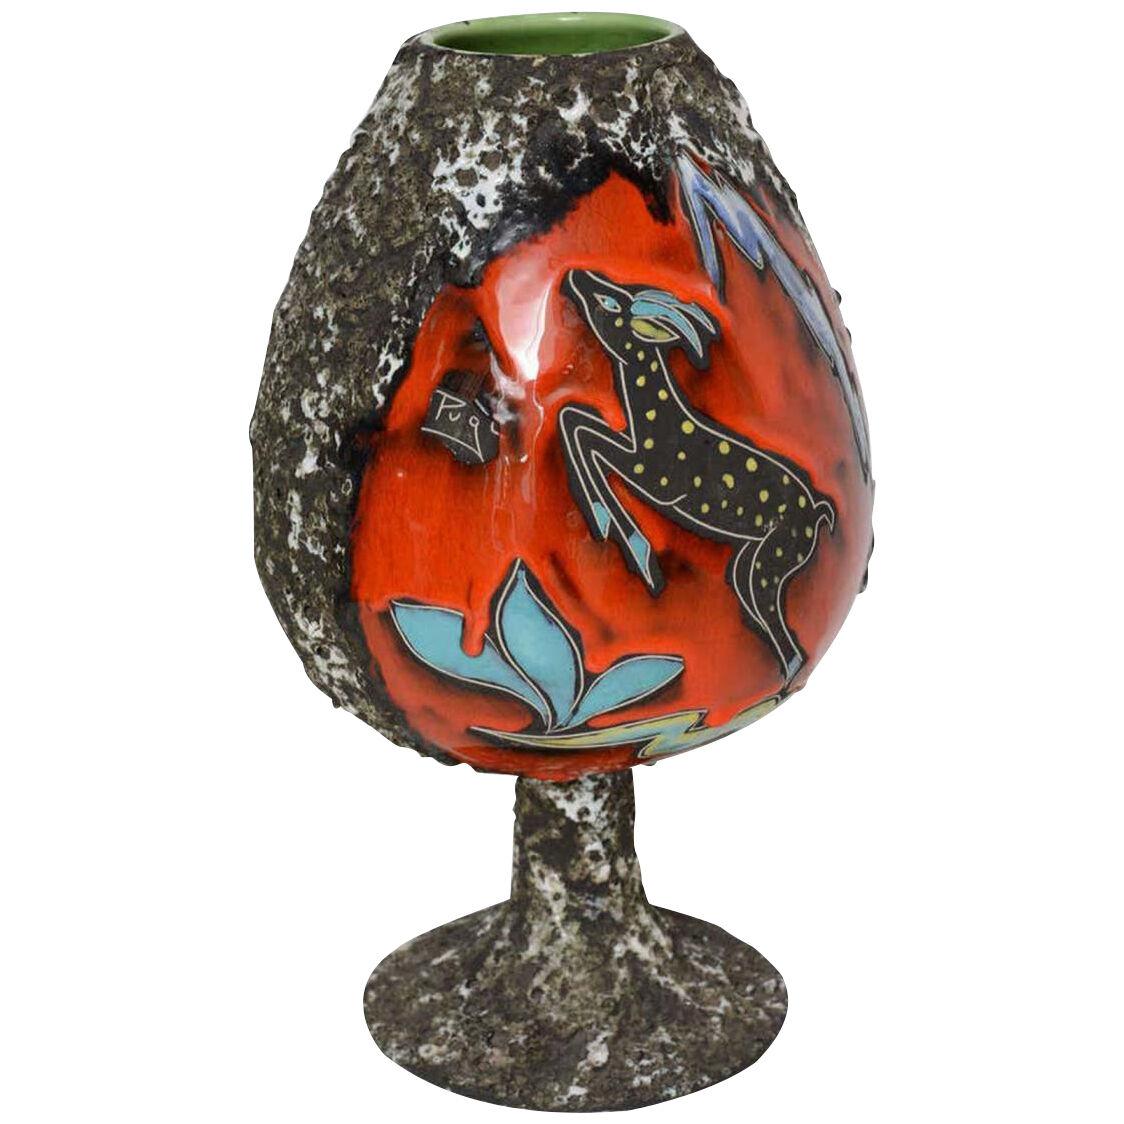 Vintage Glazed Pottery Vase, signed Ceramiche Pugi, 1960s Italy